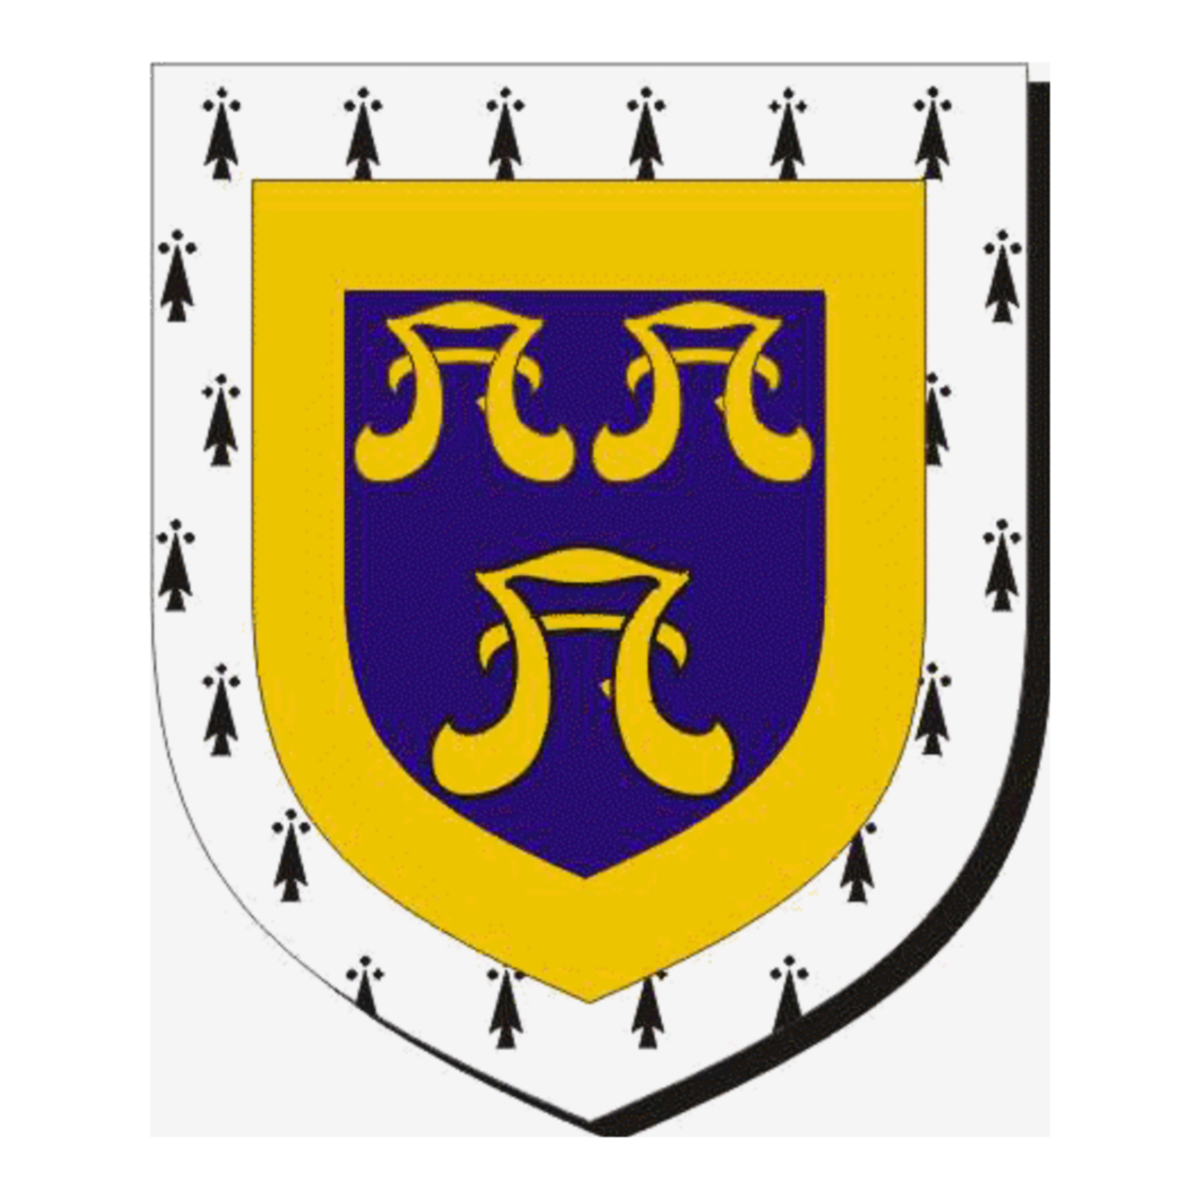 Coat of arms of familyBridges